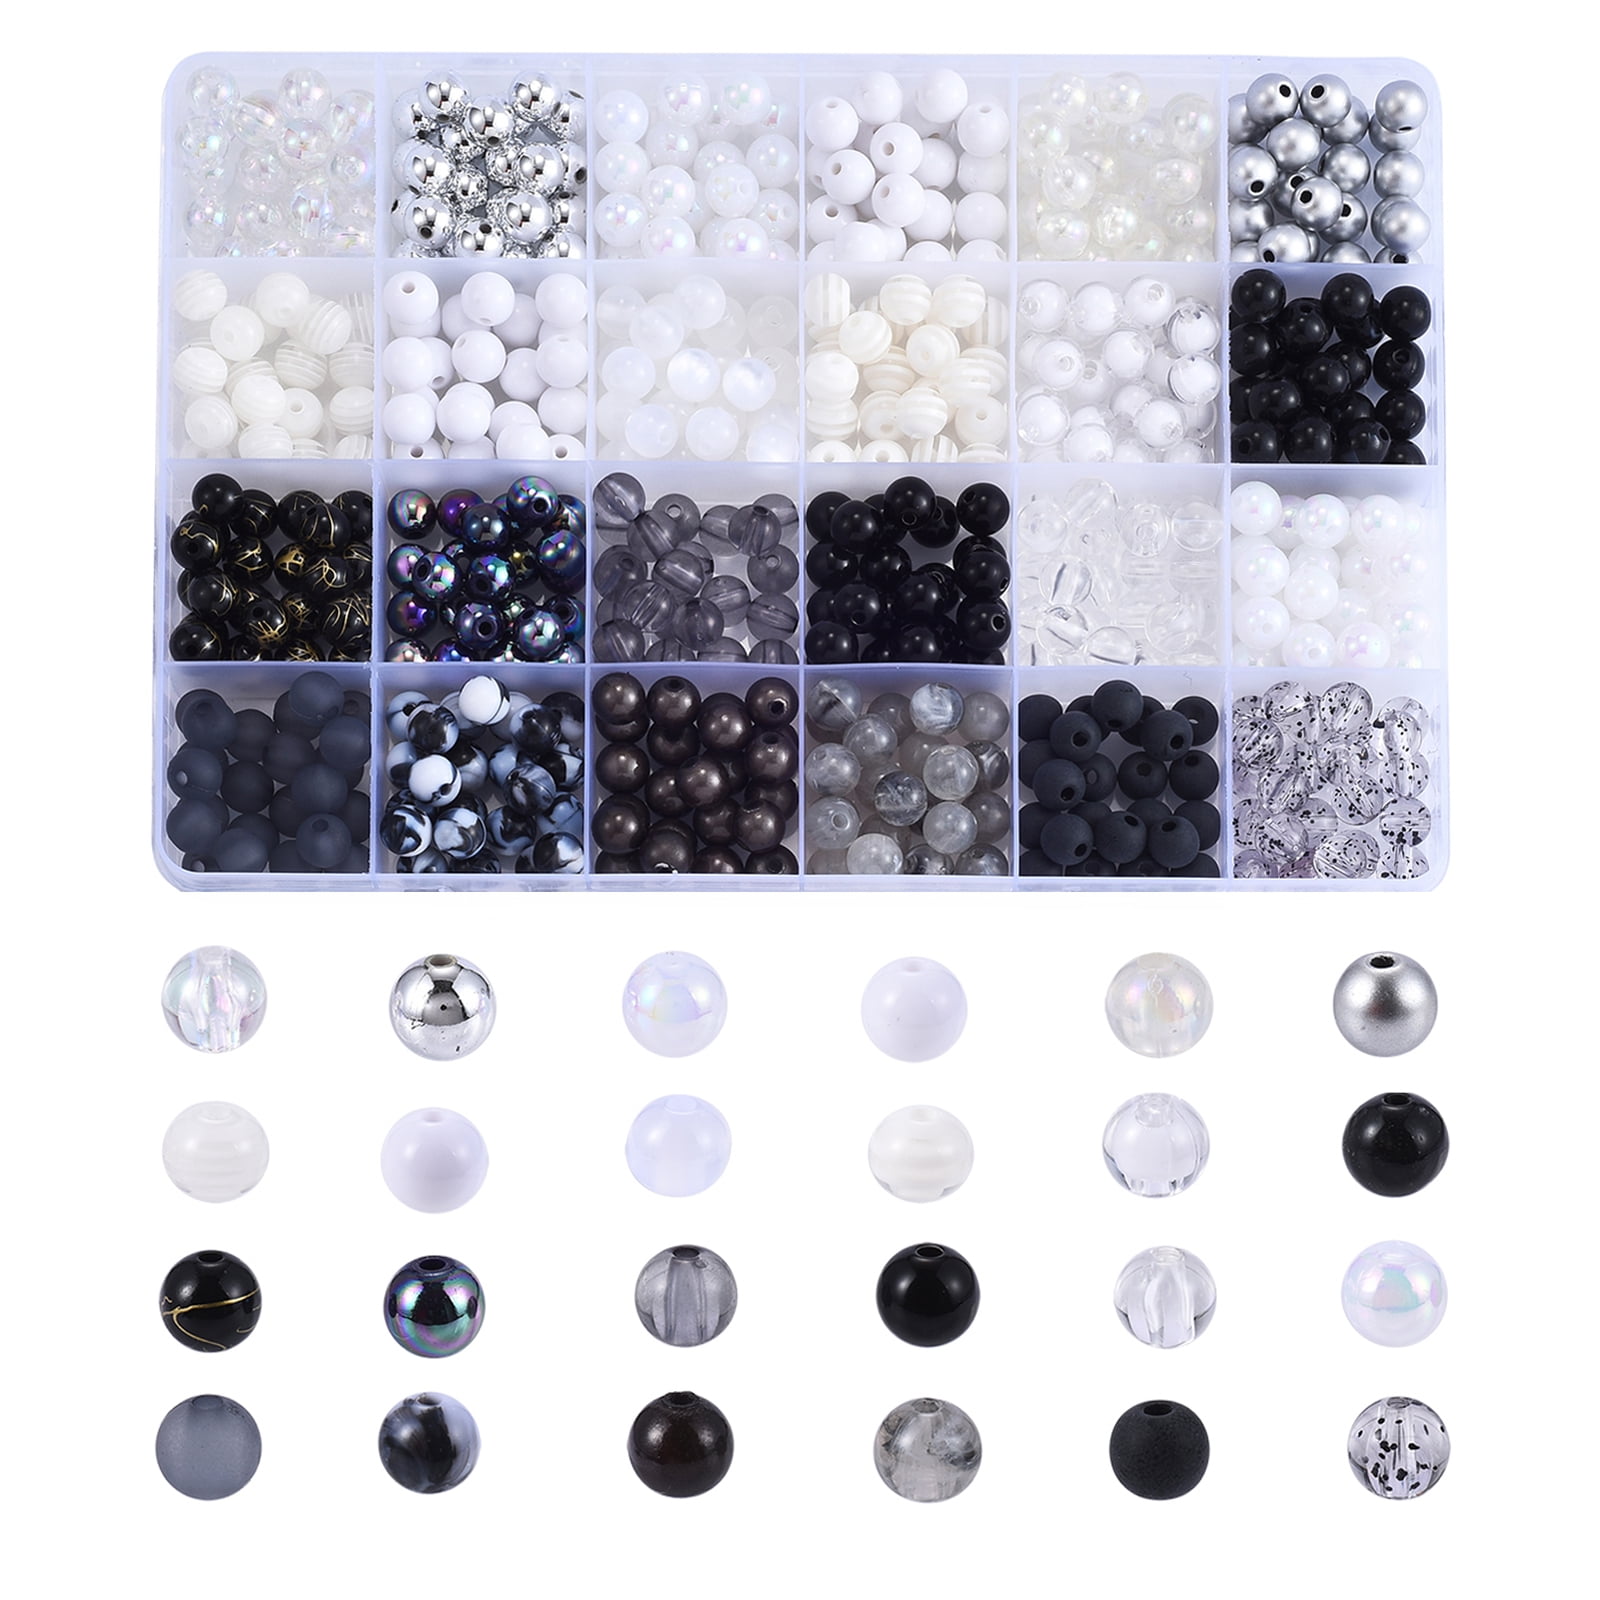 10pcs A-U ROUND White/Black Individual VOWEL Round Letter Beads A E I O U  DIY BEAD Jewelry Making